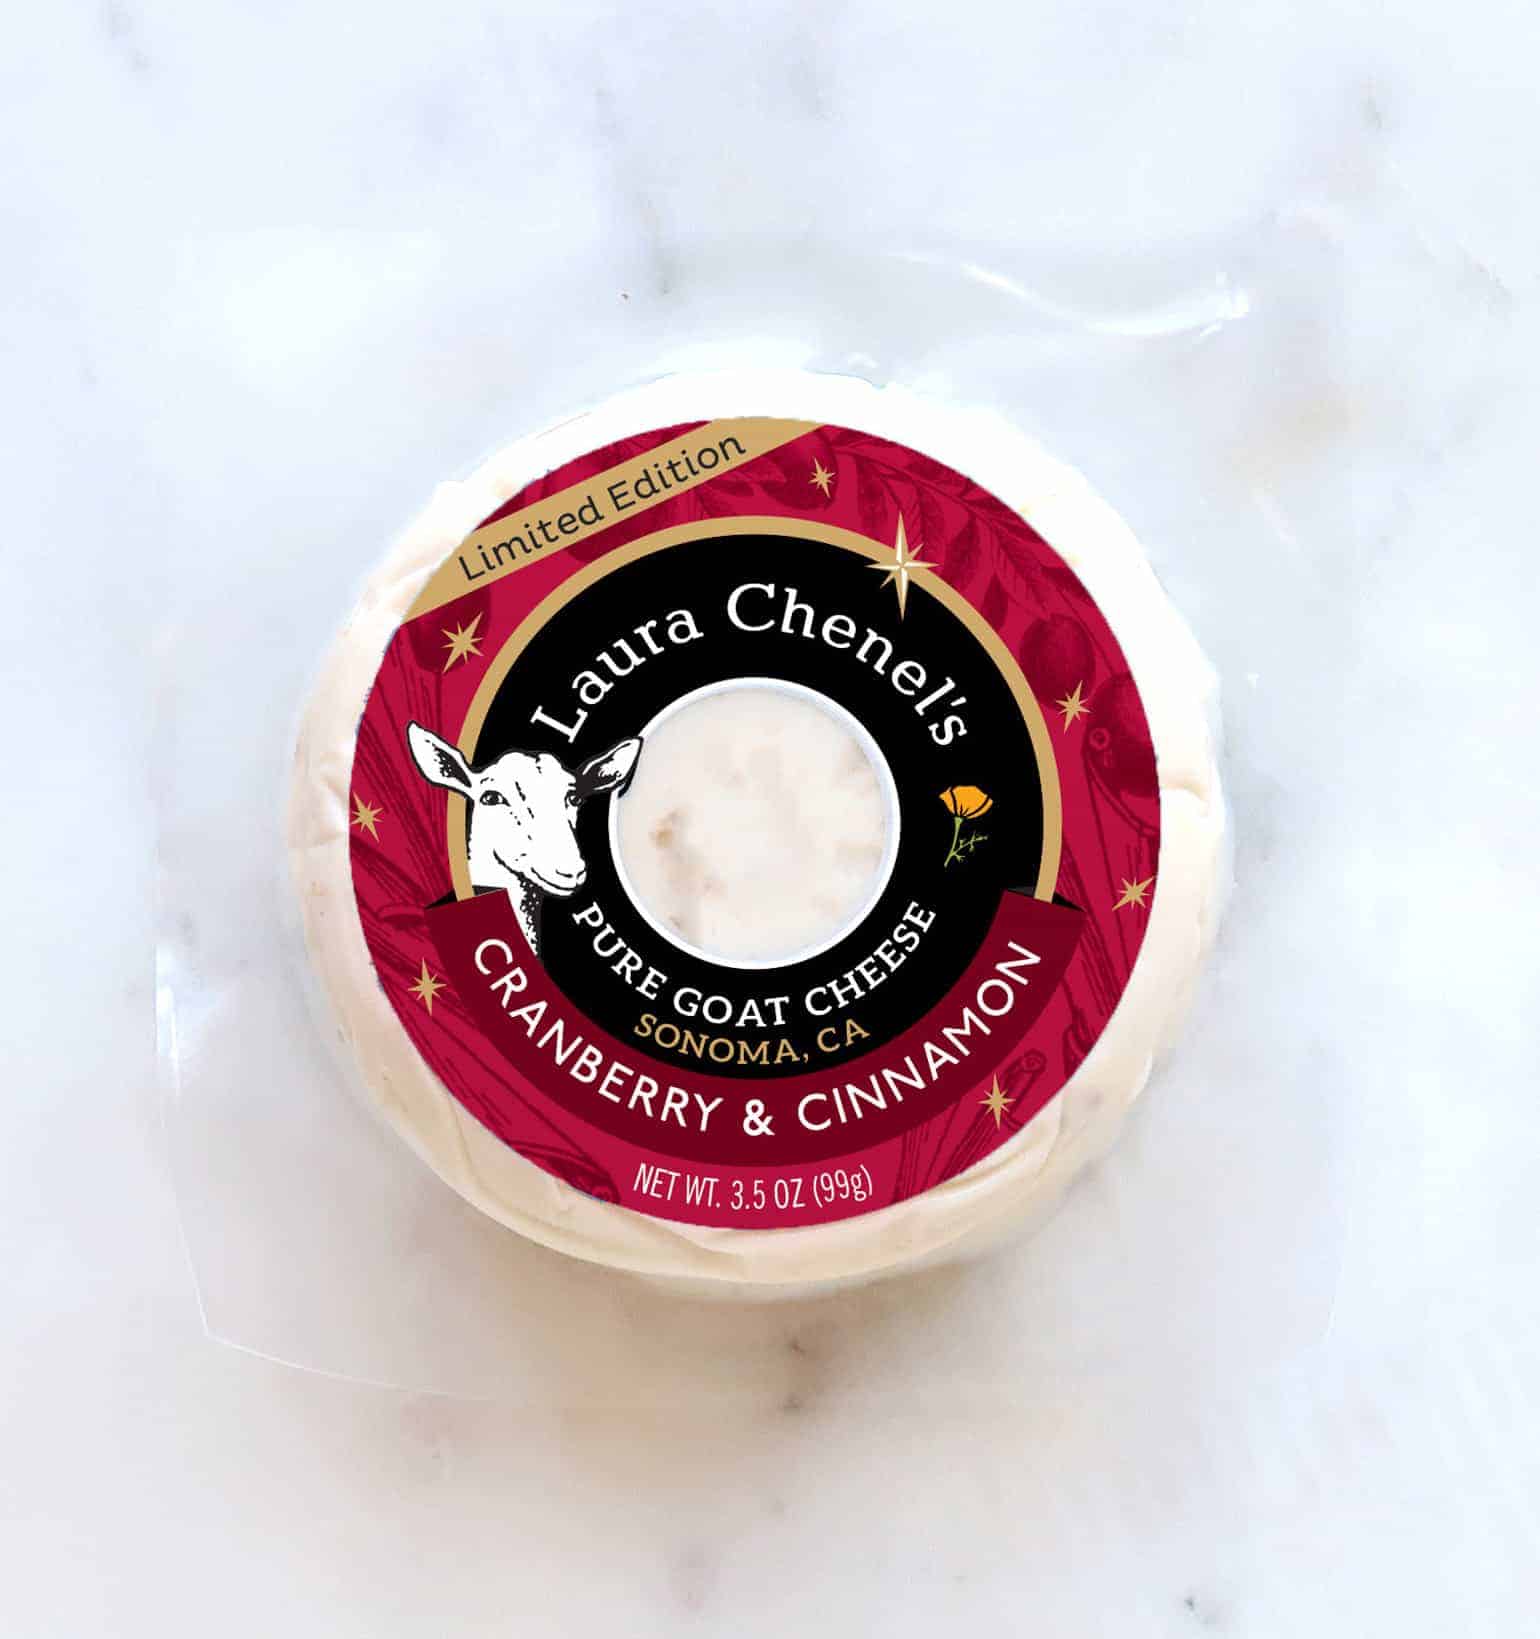 laura-chenel-s-cranberry-cinnamon-goat-cheese-credit-laura-chenel-s-c